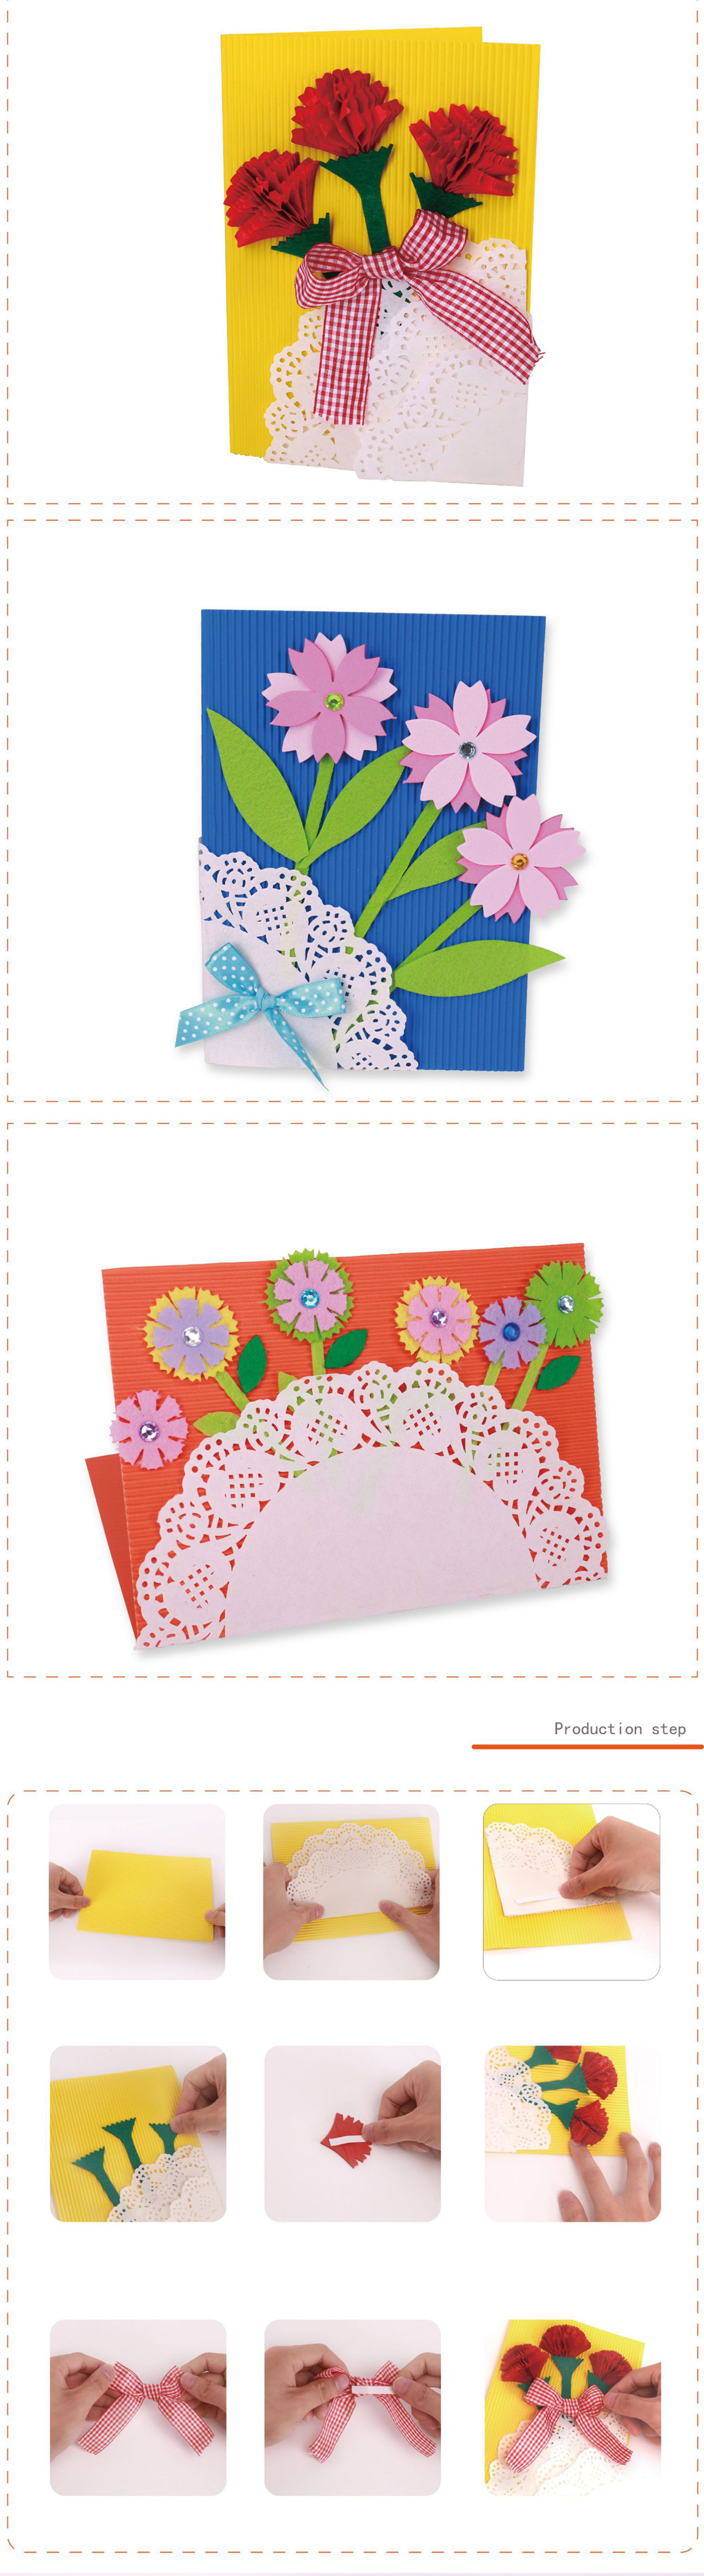 MEIKE-M1418-DIY-Handmade-Mothers-Day-Greeting-Card-Set-Flower-Paper-Anniversary-Birthday-Thanksgivin-1668422-2